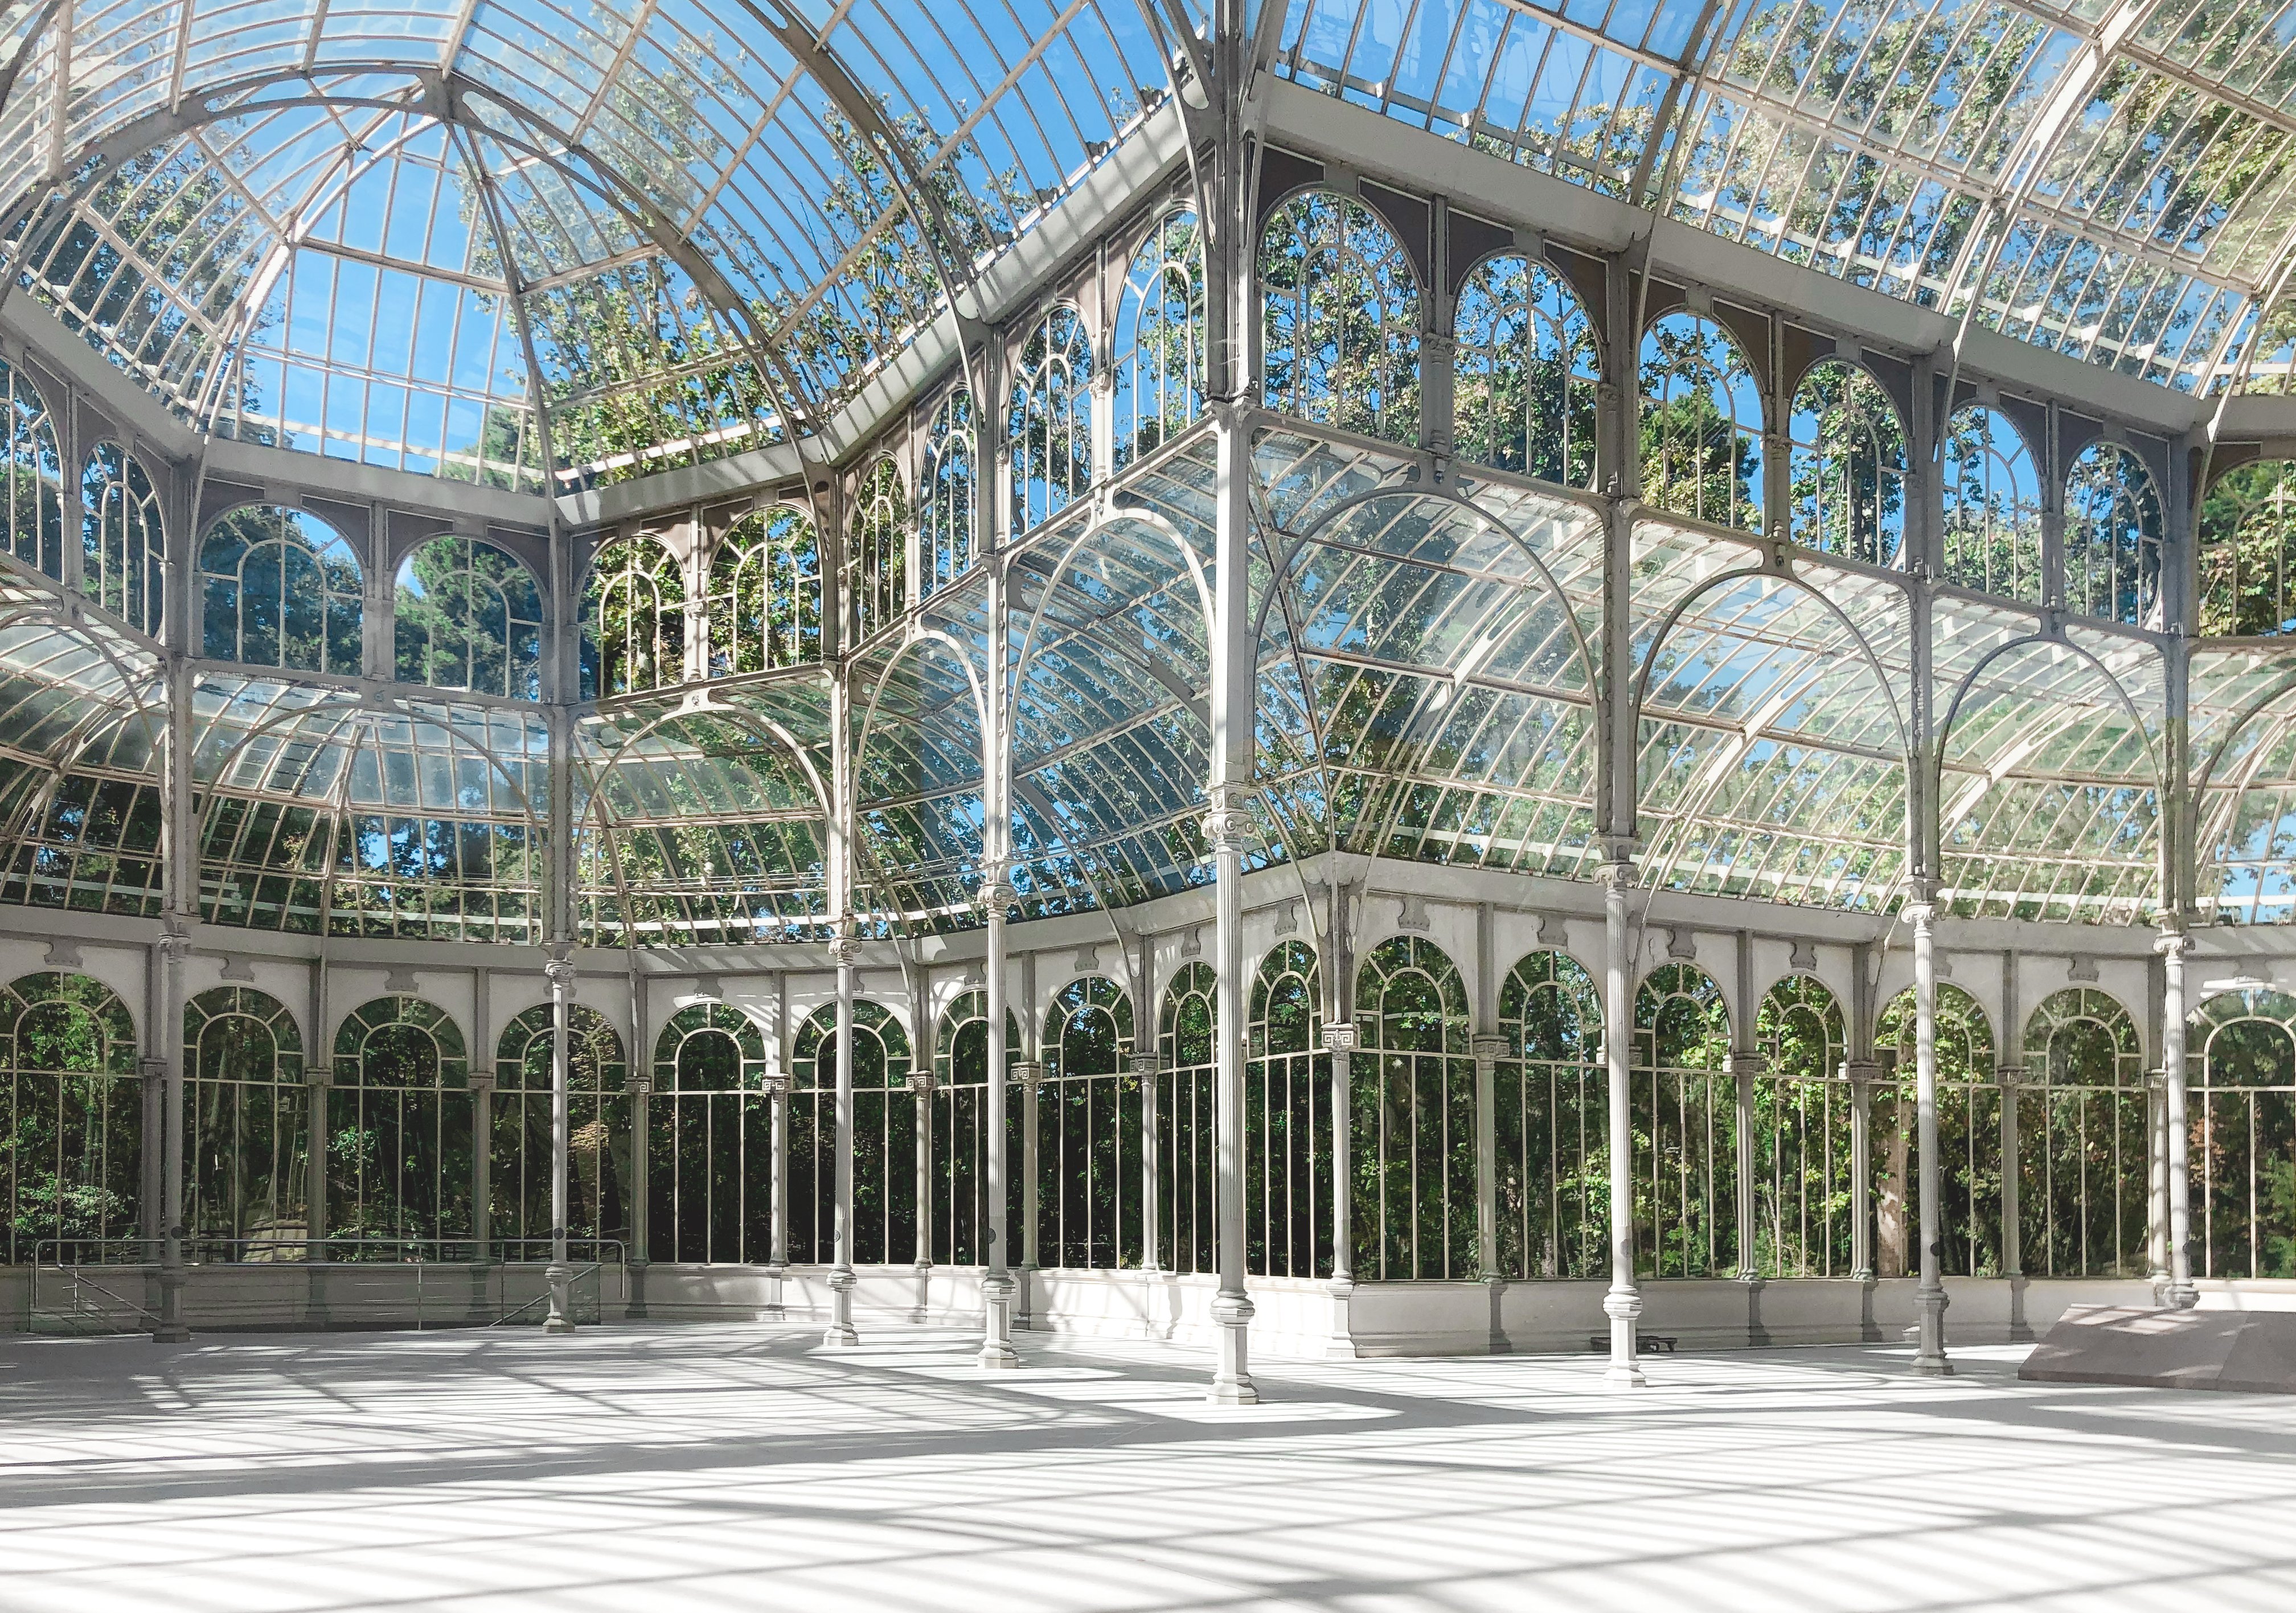 El Retiro Park Glass Palace interior Madrid